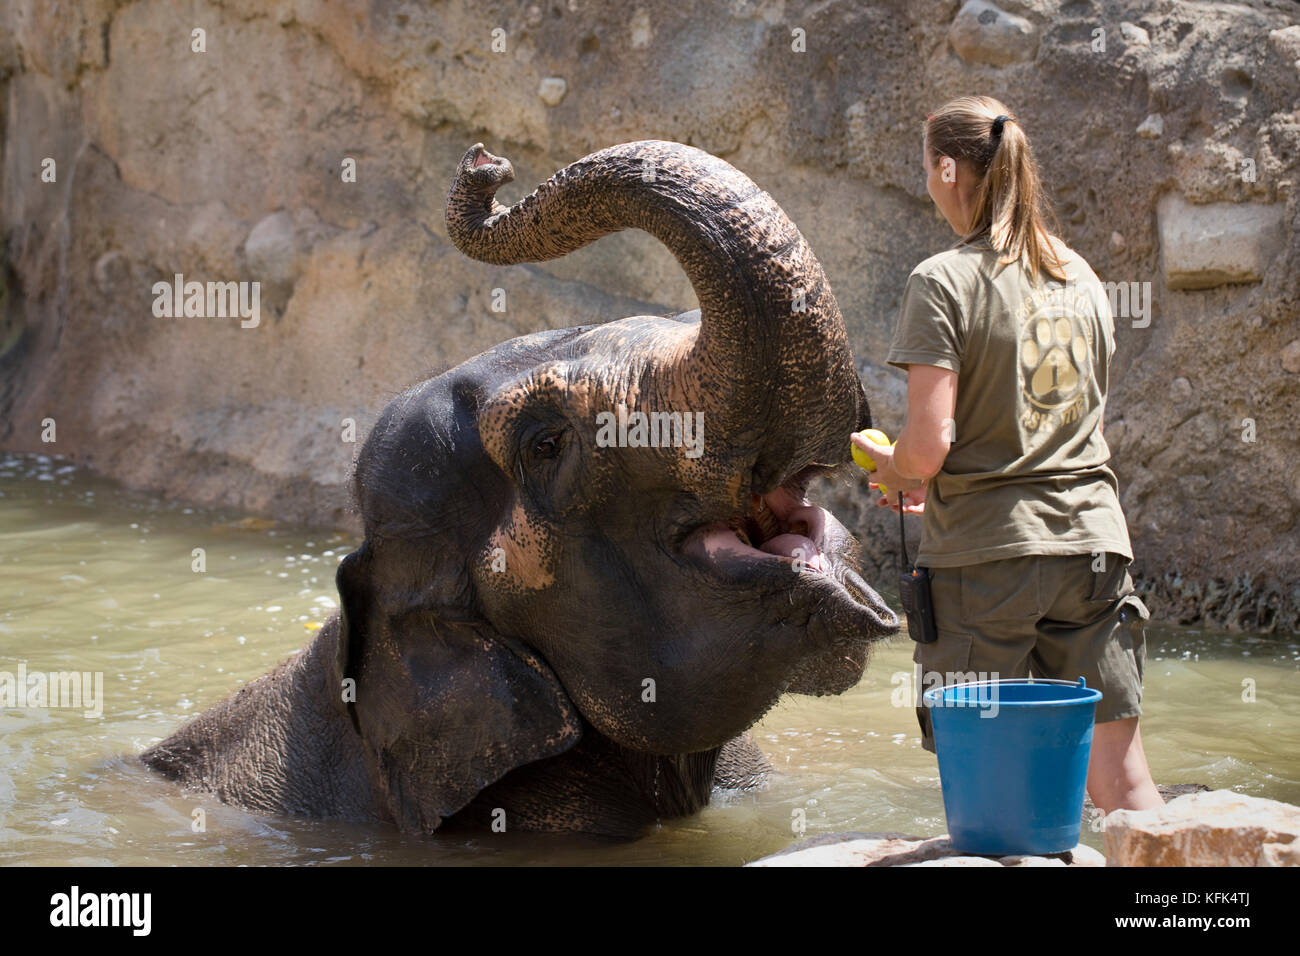 Zoo Keeper feeding apples to an elephant in captivity, Spain Stock Photo